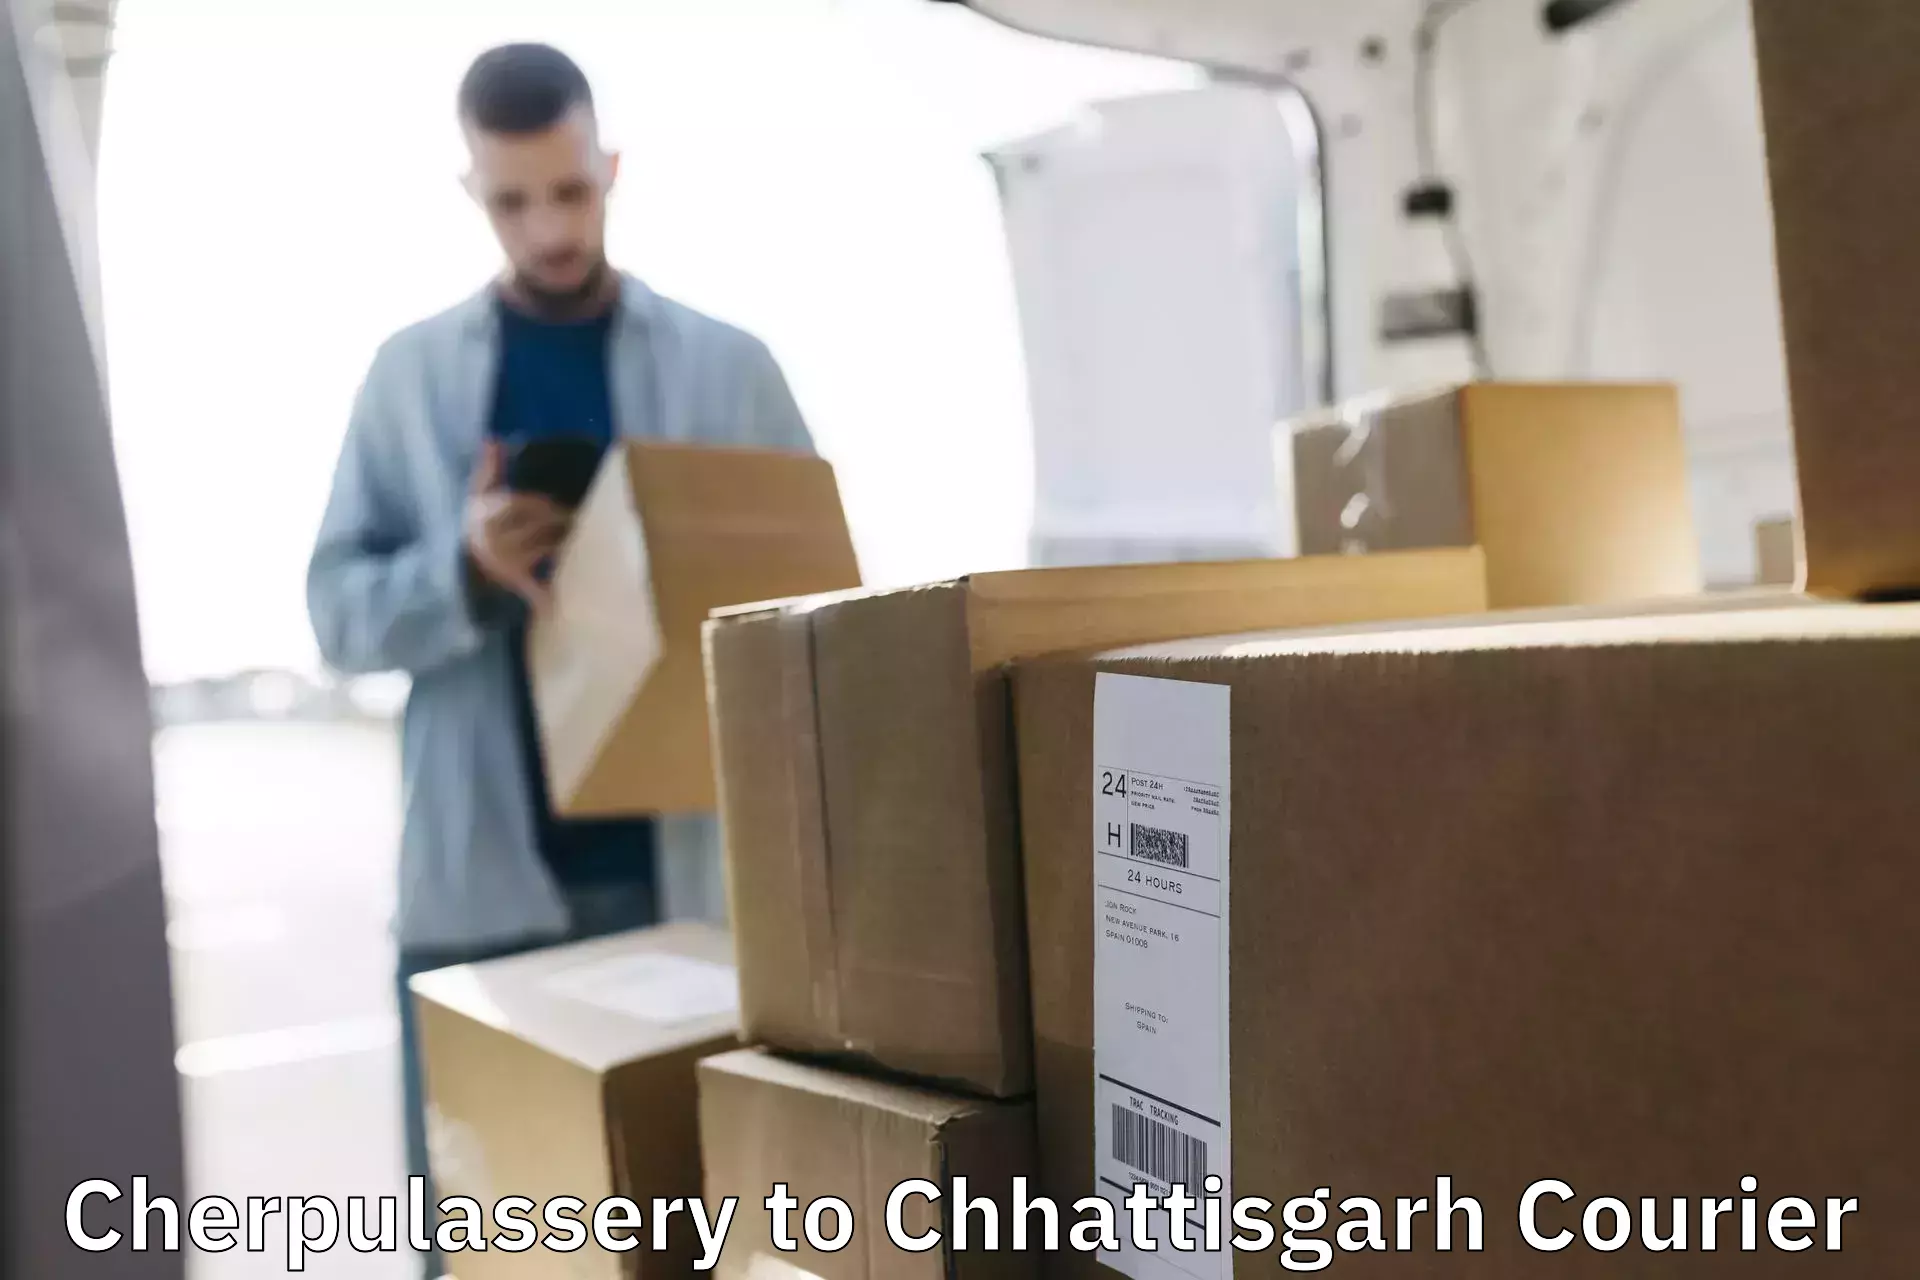 High-capacity parcel service Cherpulassery to Pathalgaon